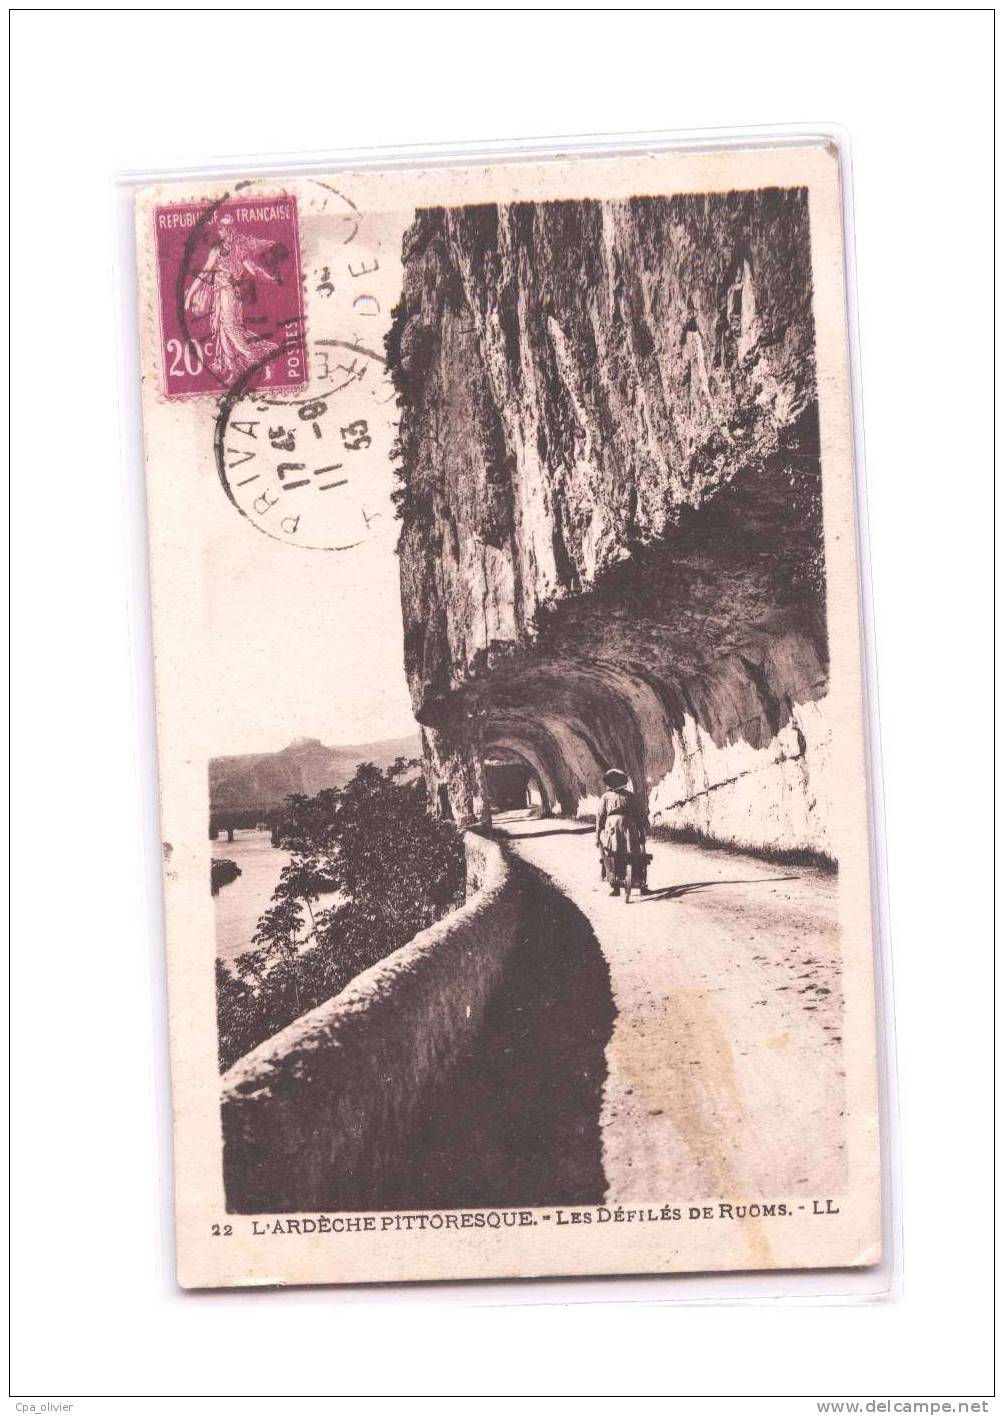 07 RUOMS (environs) Route, Défilé, Ed LL 22, Ardèche Pittoresque, 1933 - Ruoms